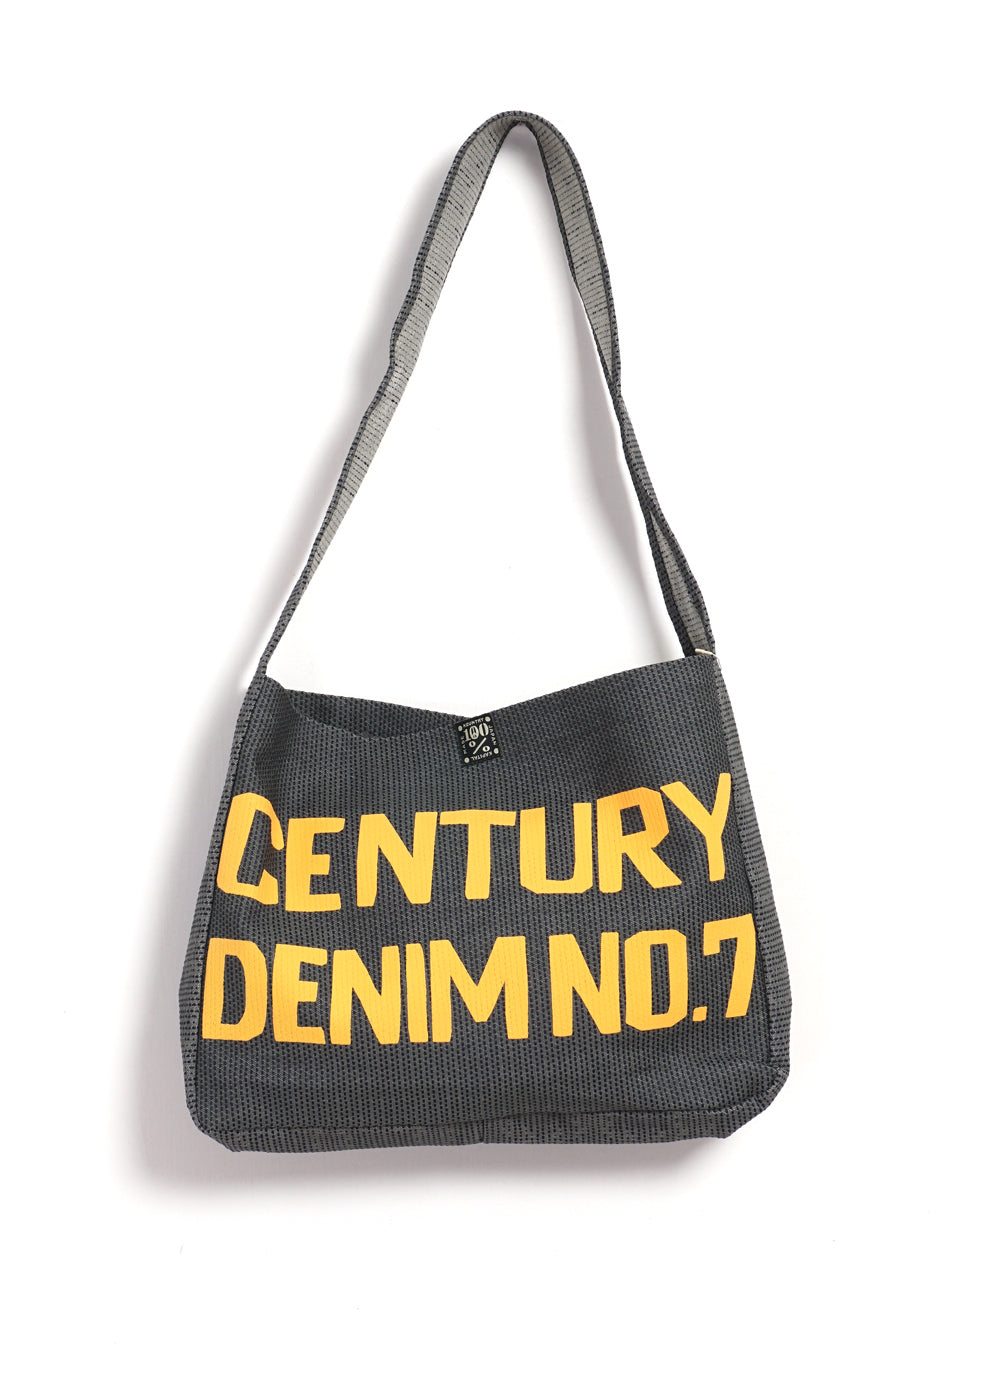 KOUNTRY BOOK BAG | Century Denim Bag | N7S(Silver)